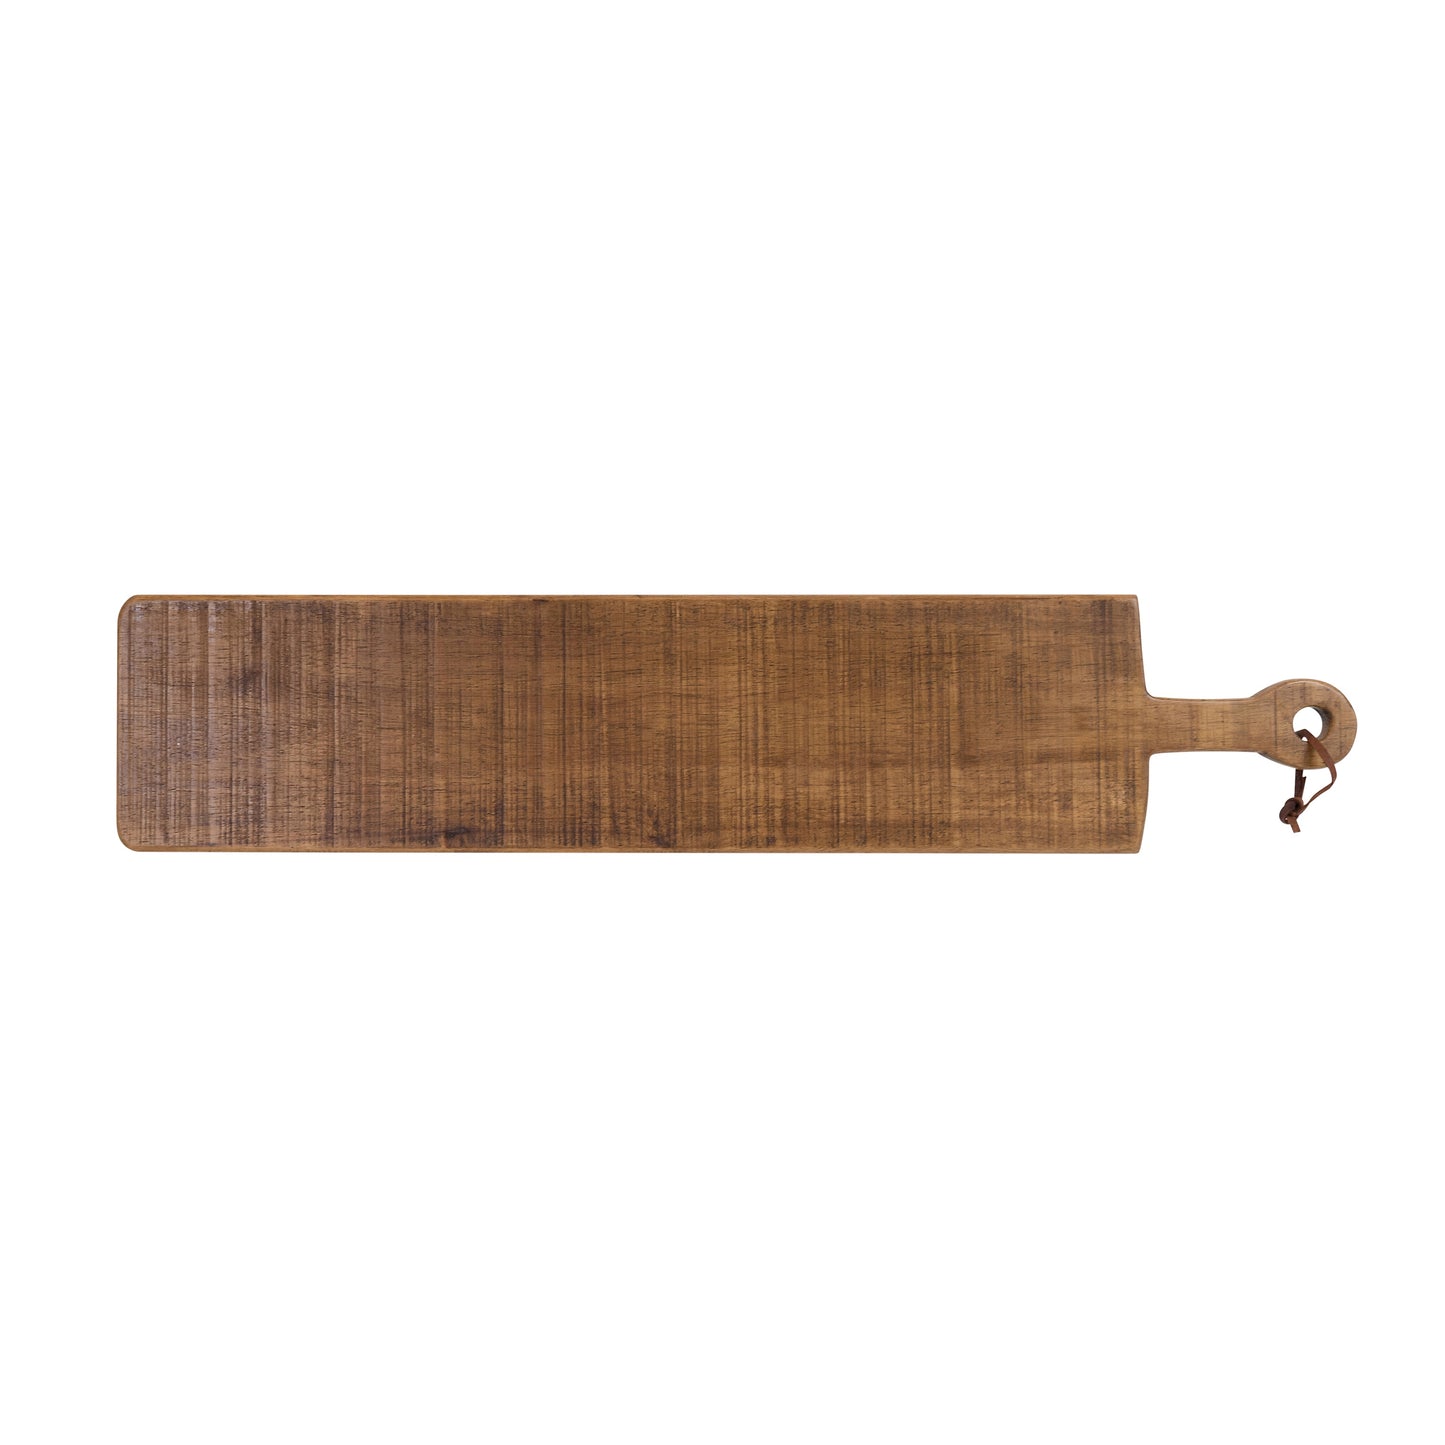 Herne Rubber Wood Handled Board X Long